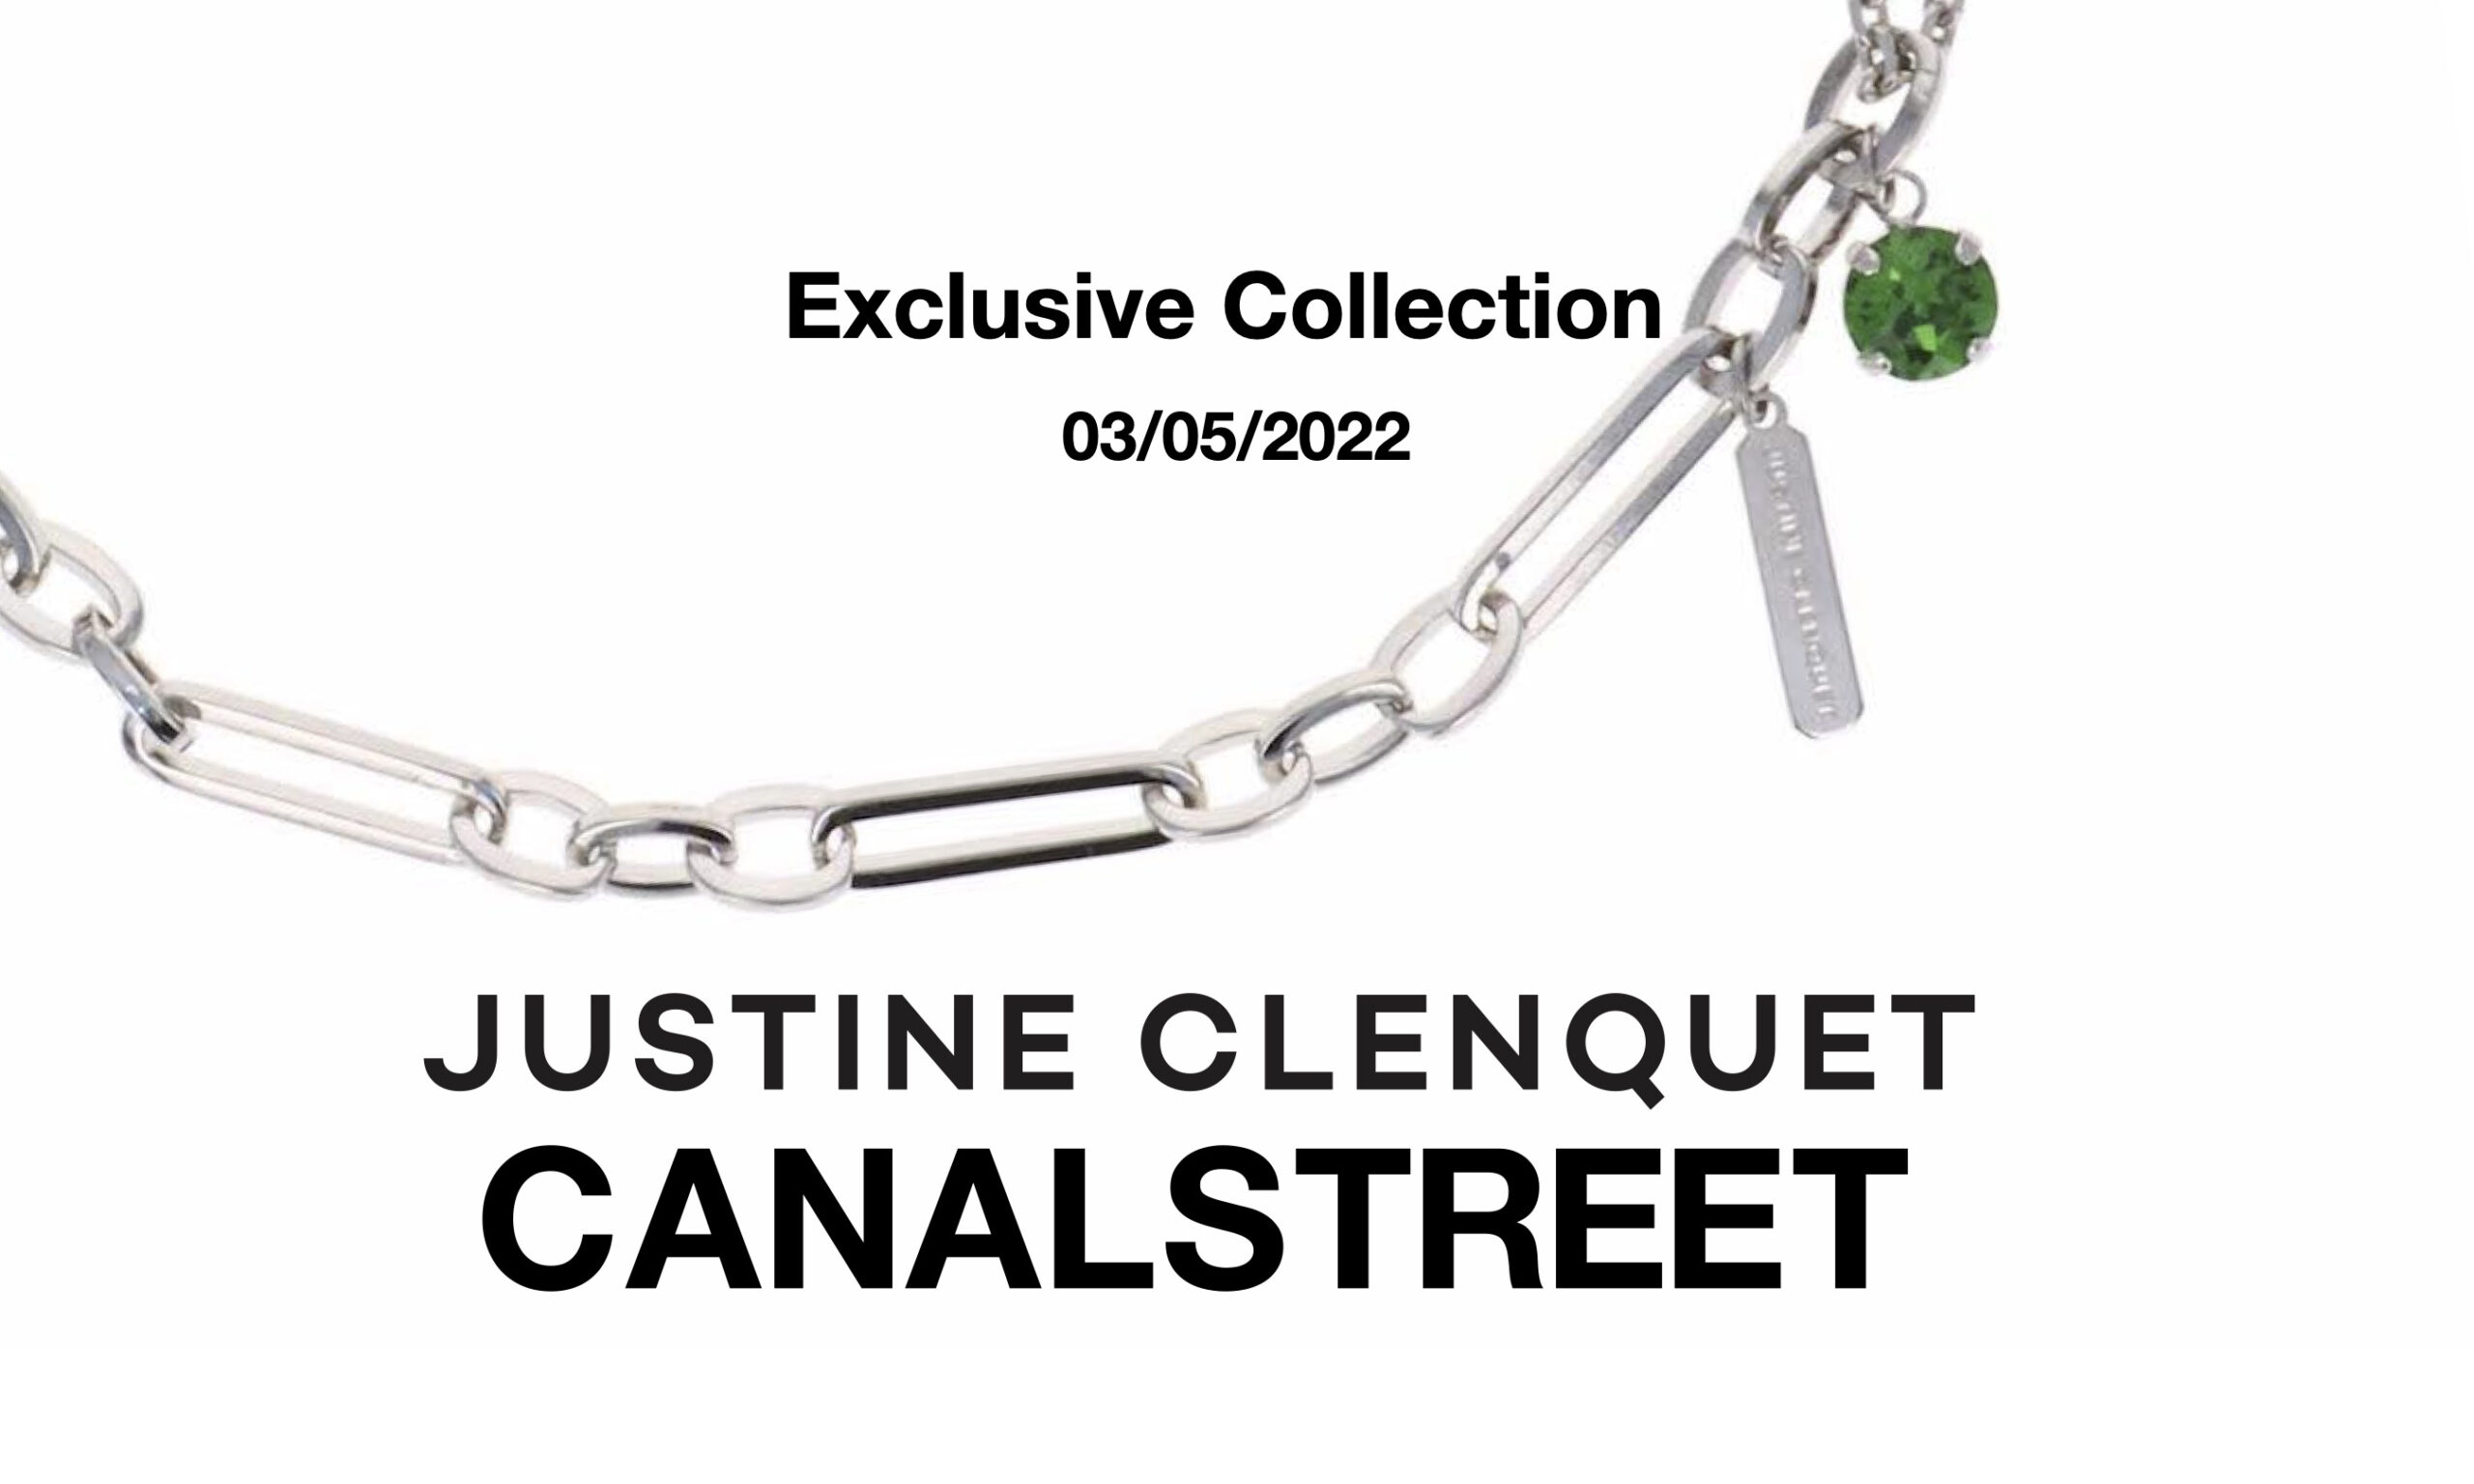 CANALSTREET x 法国首饰品牌 JUSTINE CLENQUET 「春天的细语」联乘系列